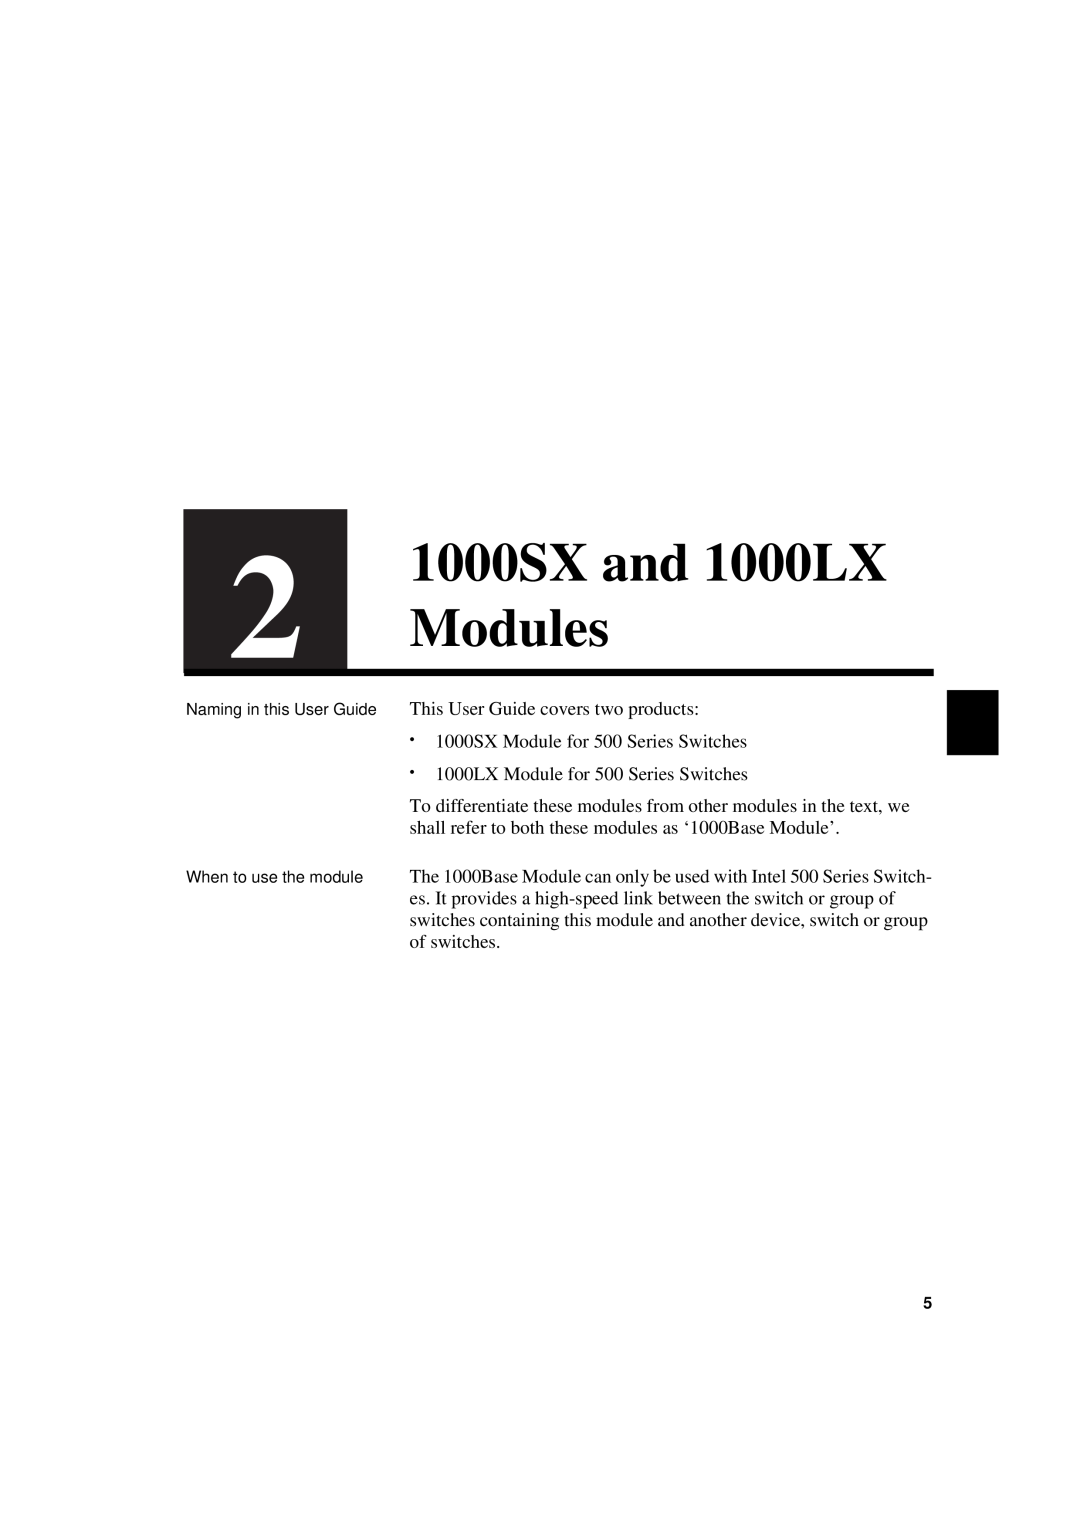 Intel manual 1000SX and 1000LX Modules 